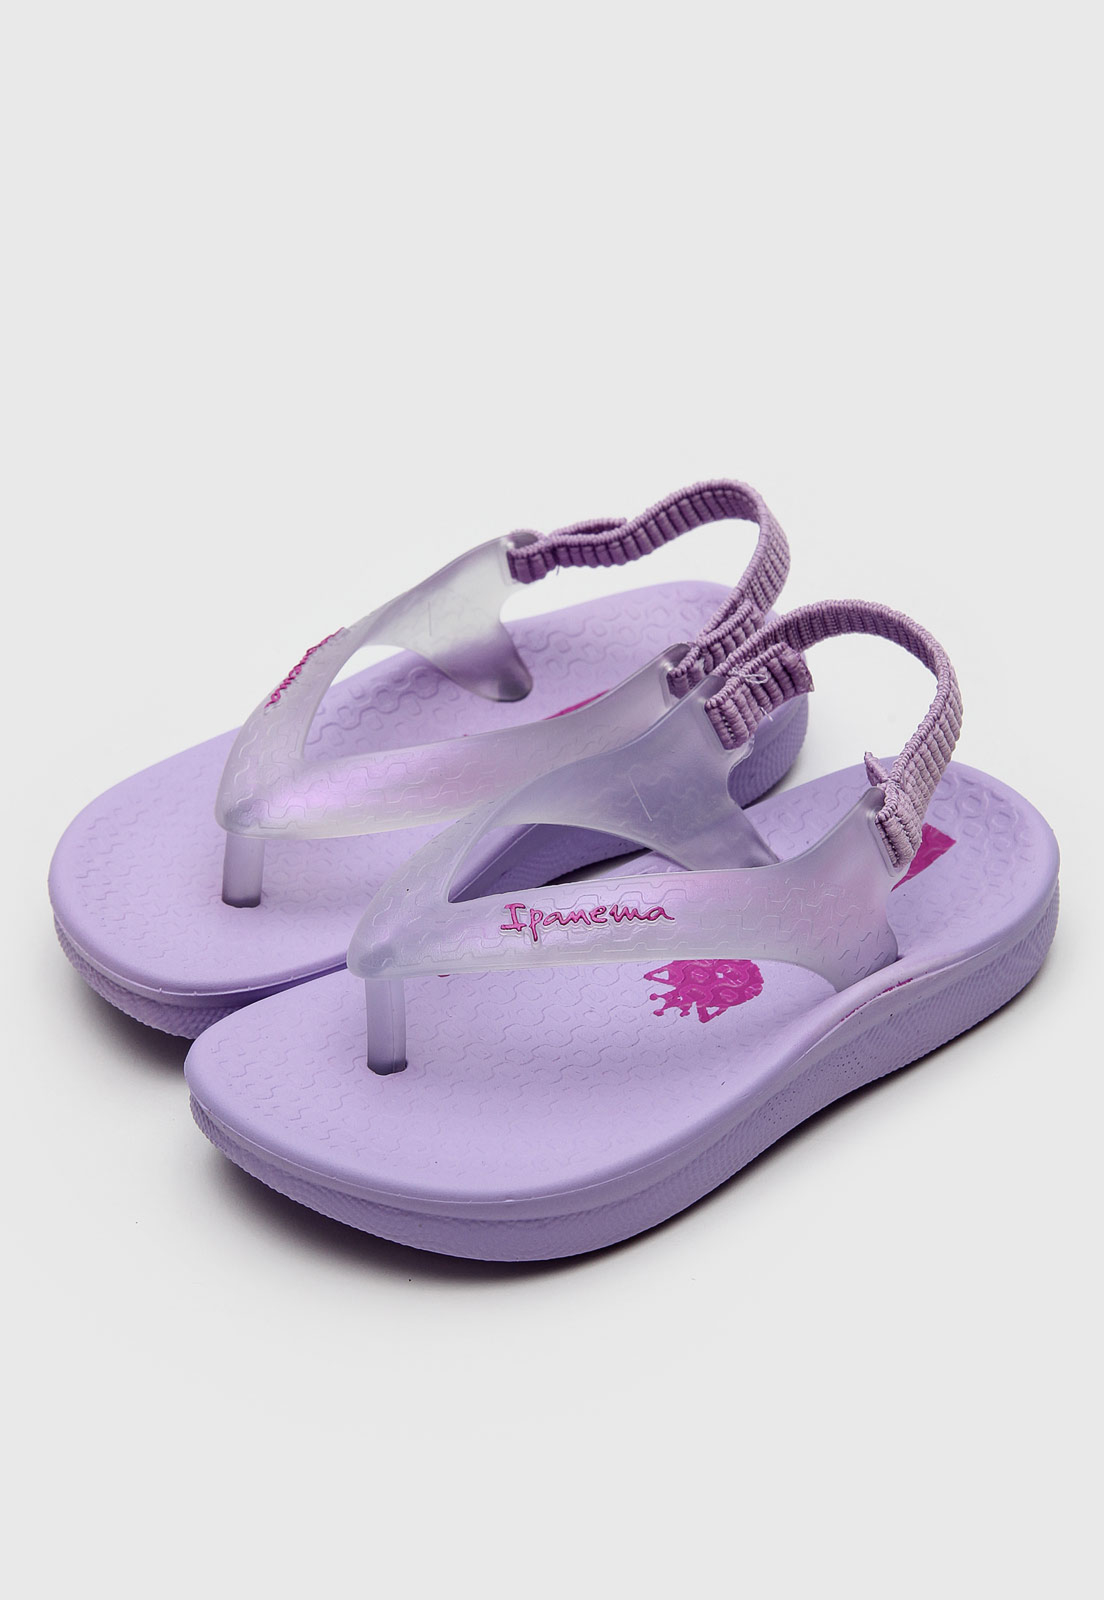 Sandals Ipanema Anatomica Soft Baby Lilas Lilas - Brand Ipanema